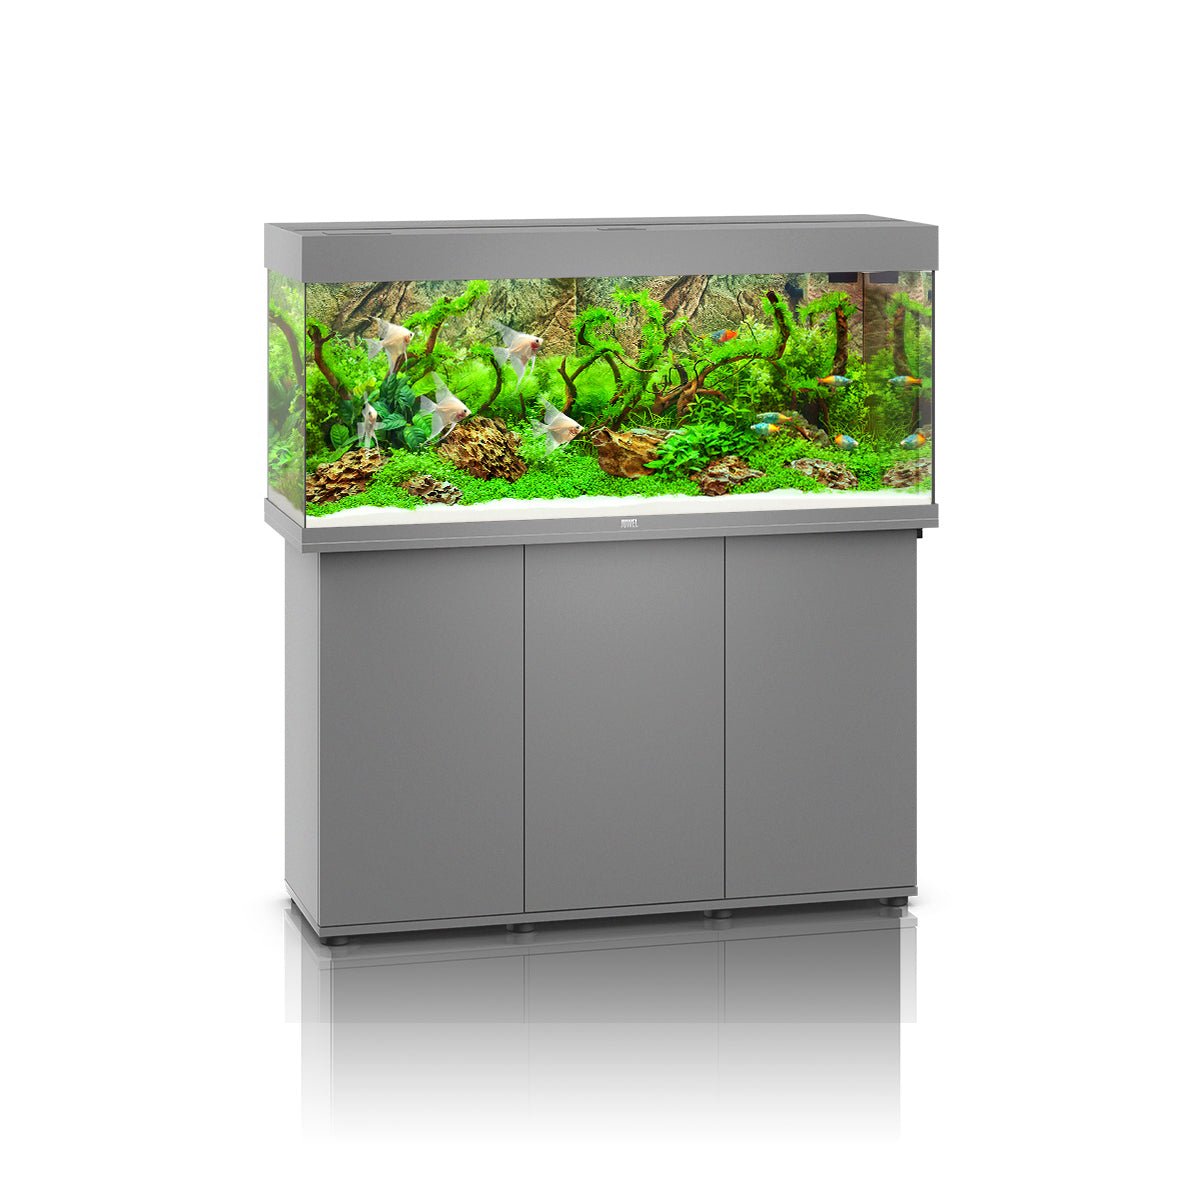 Juwel Rio 240 LED Aquarium and Cabinet (Grey) - Charterhouse Aquatics